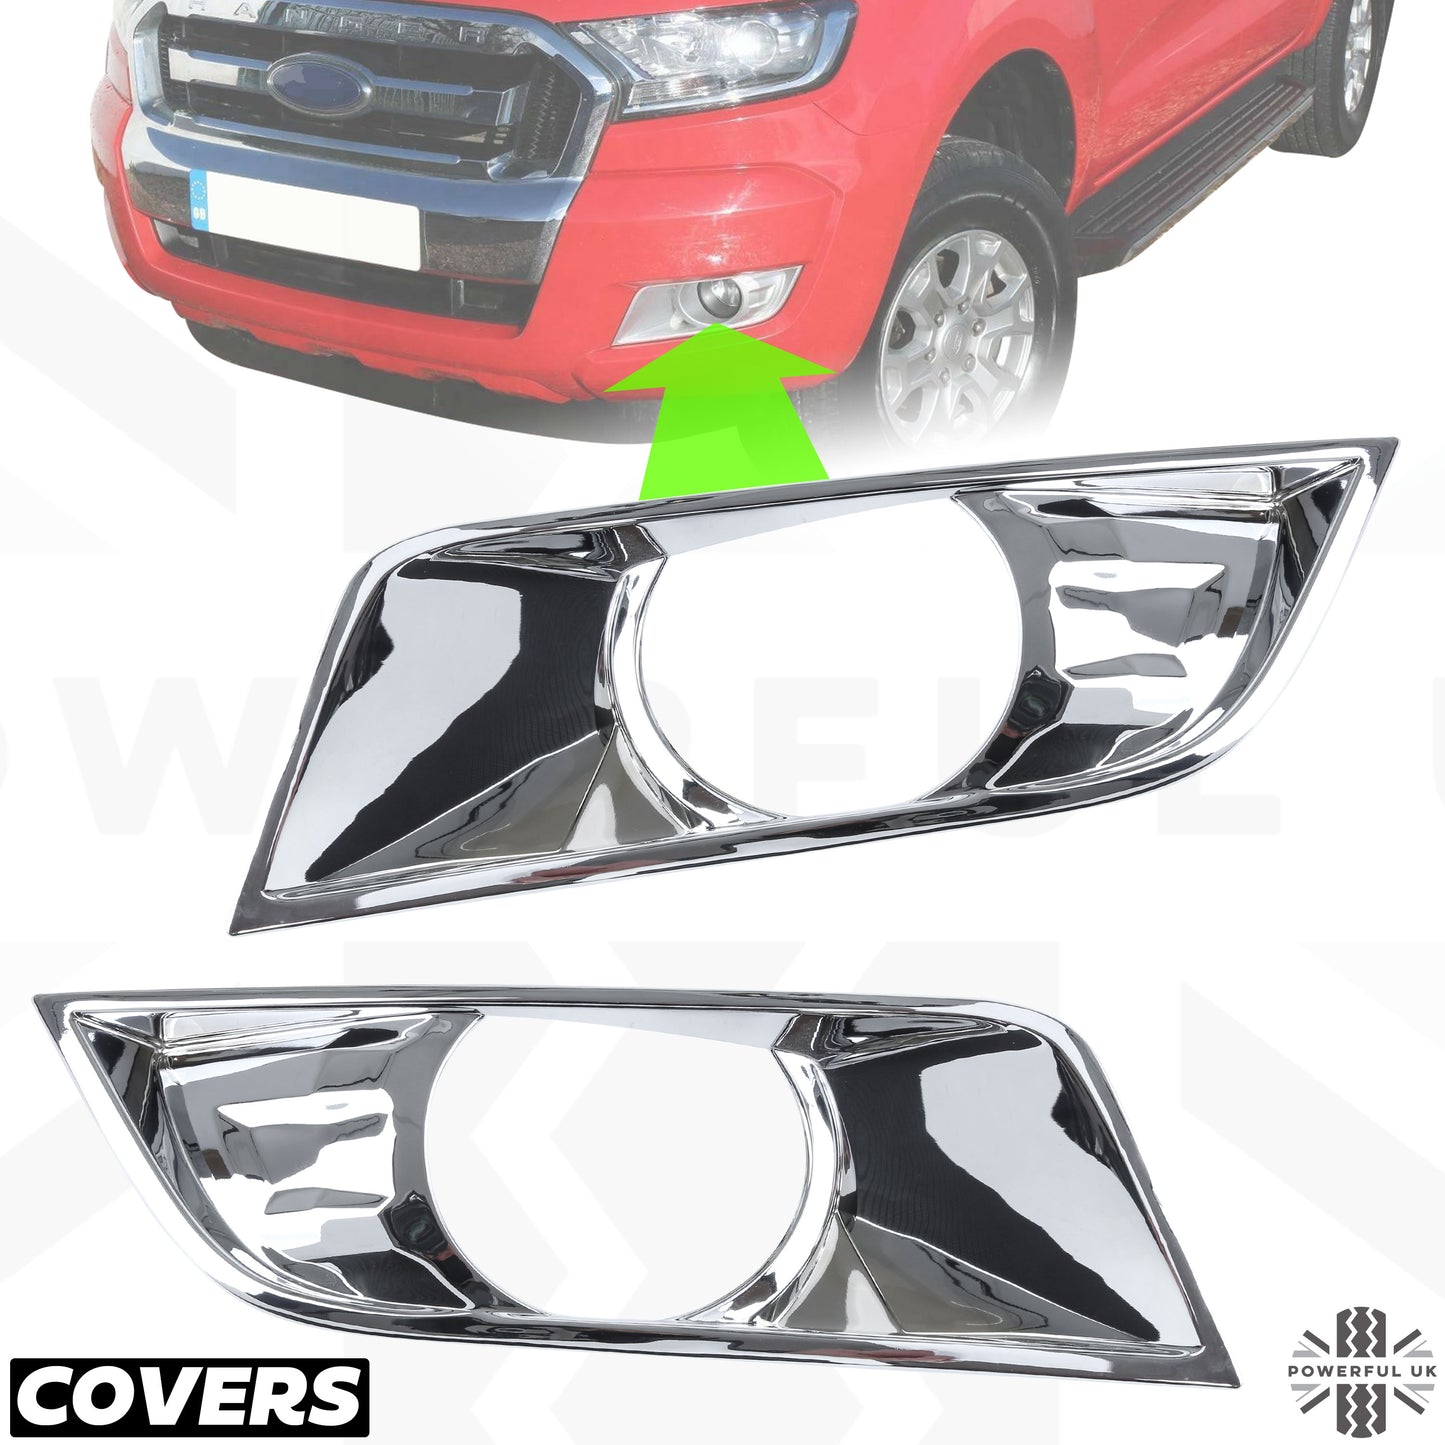 Fog Light Surround Covers in Chrome for Ford Ranger T7 2016-19 (XLT & Limited models)